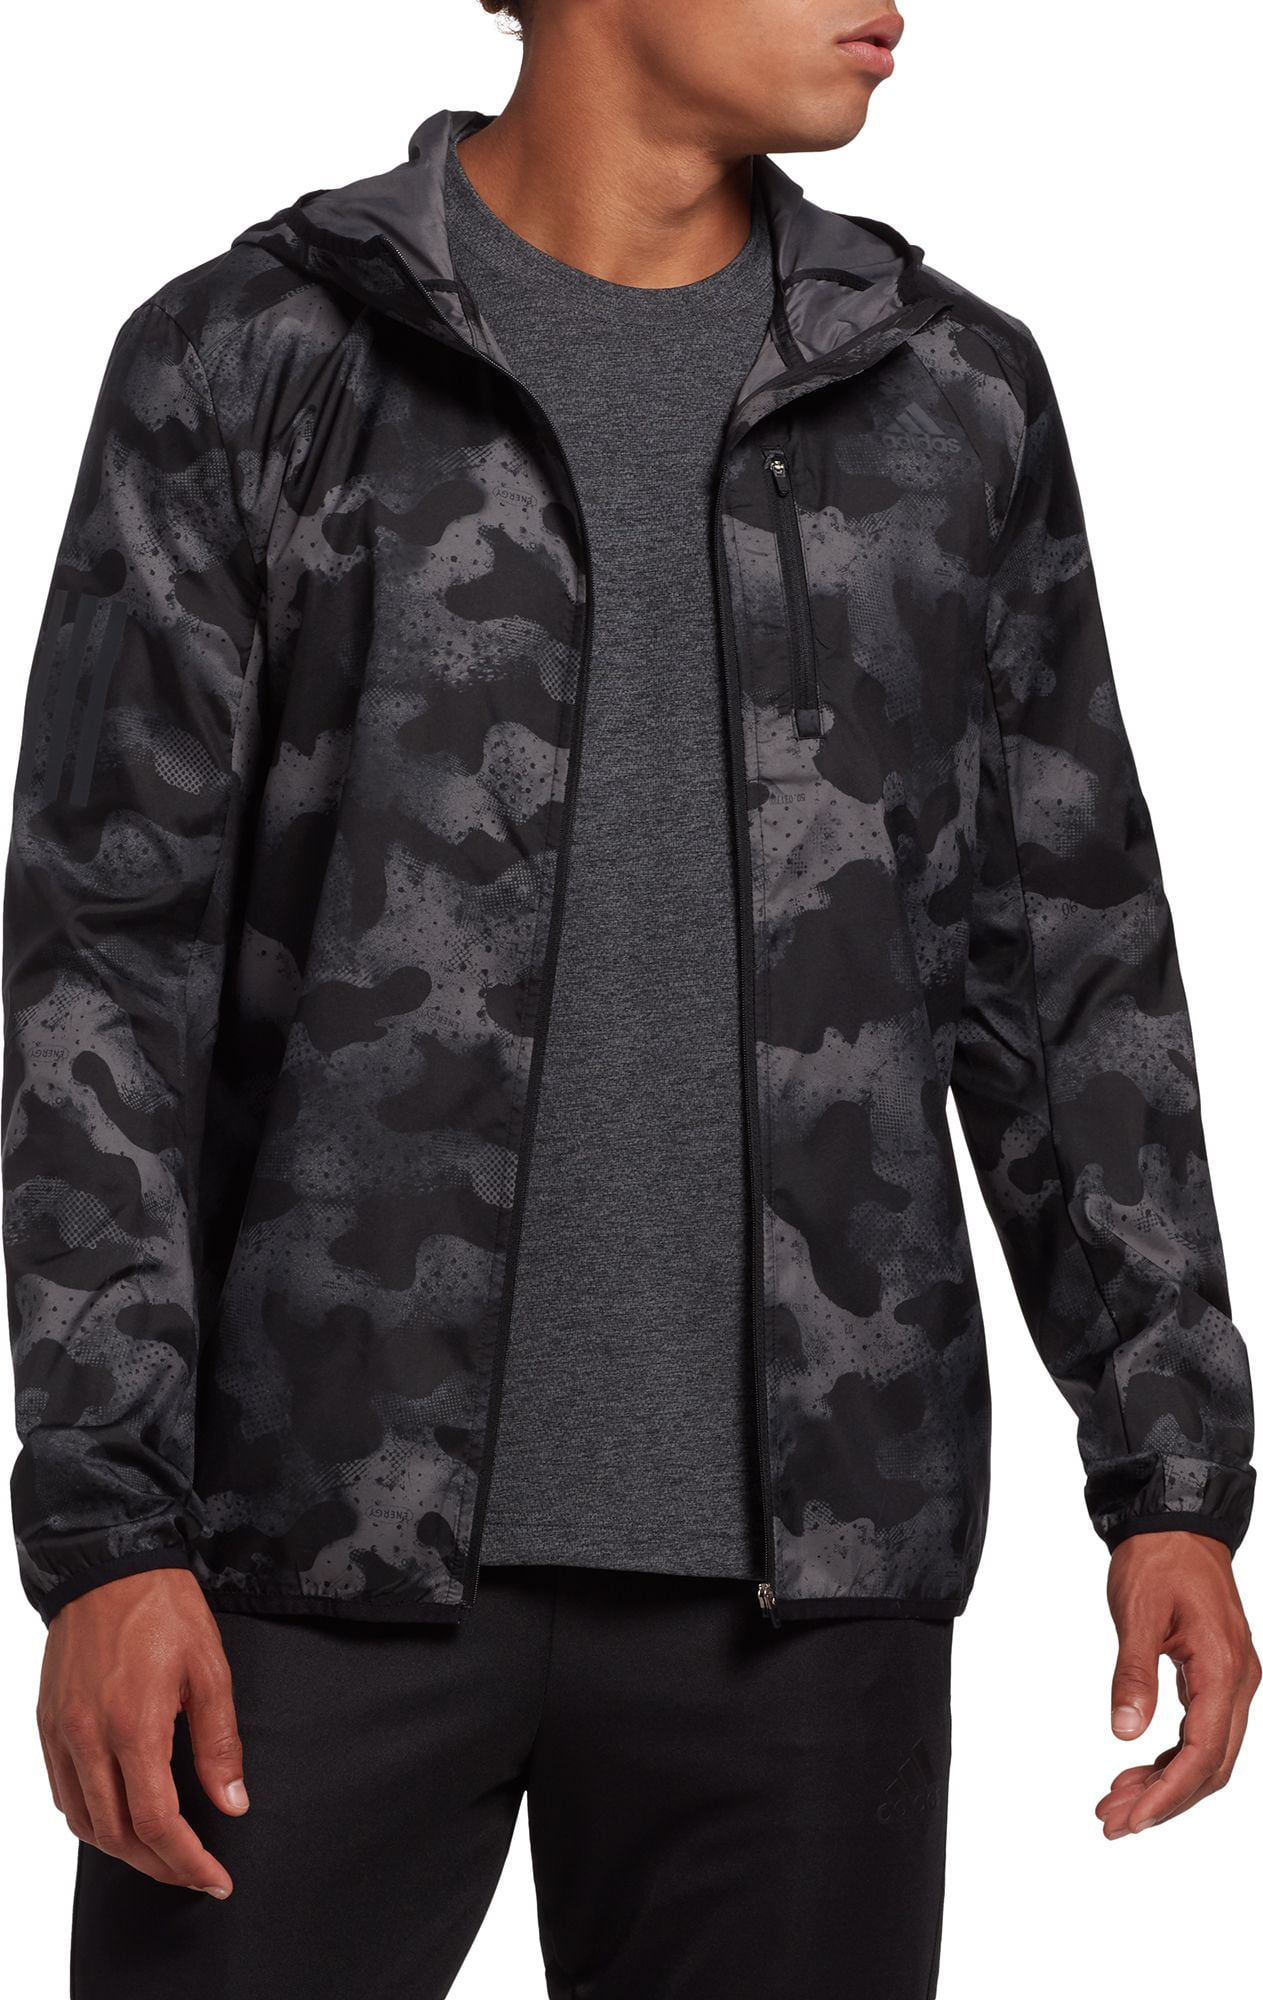 ADIDAS Mens Gray Camouflage Raincoat Jacket S - Walmart.com